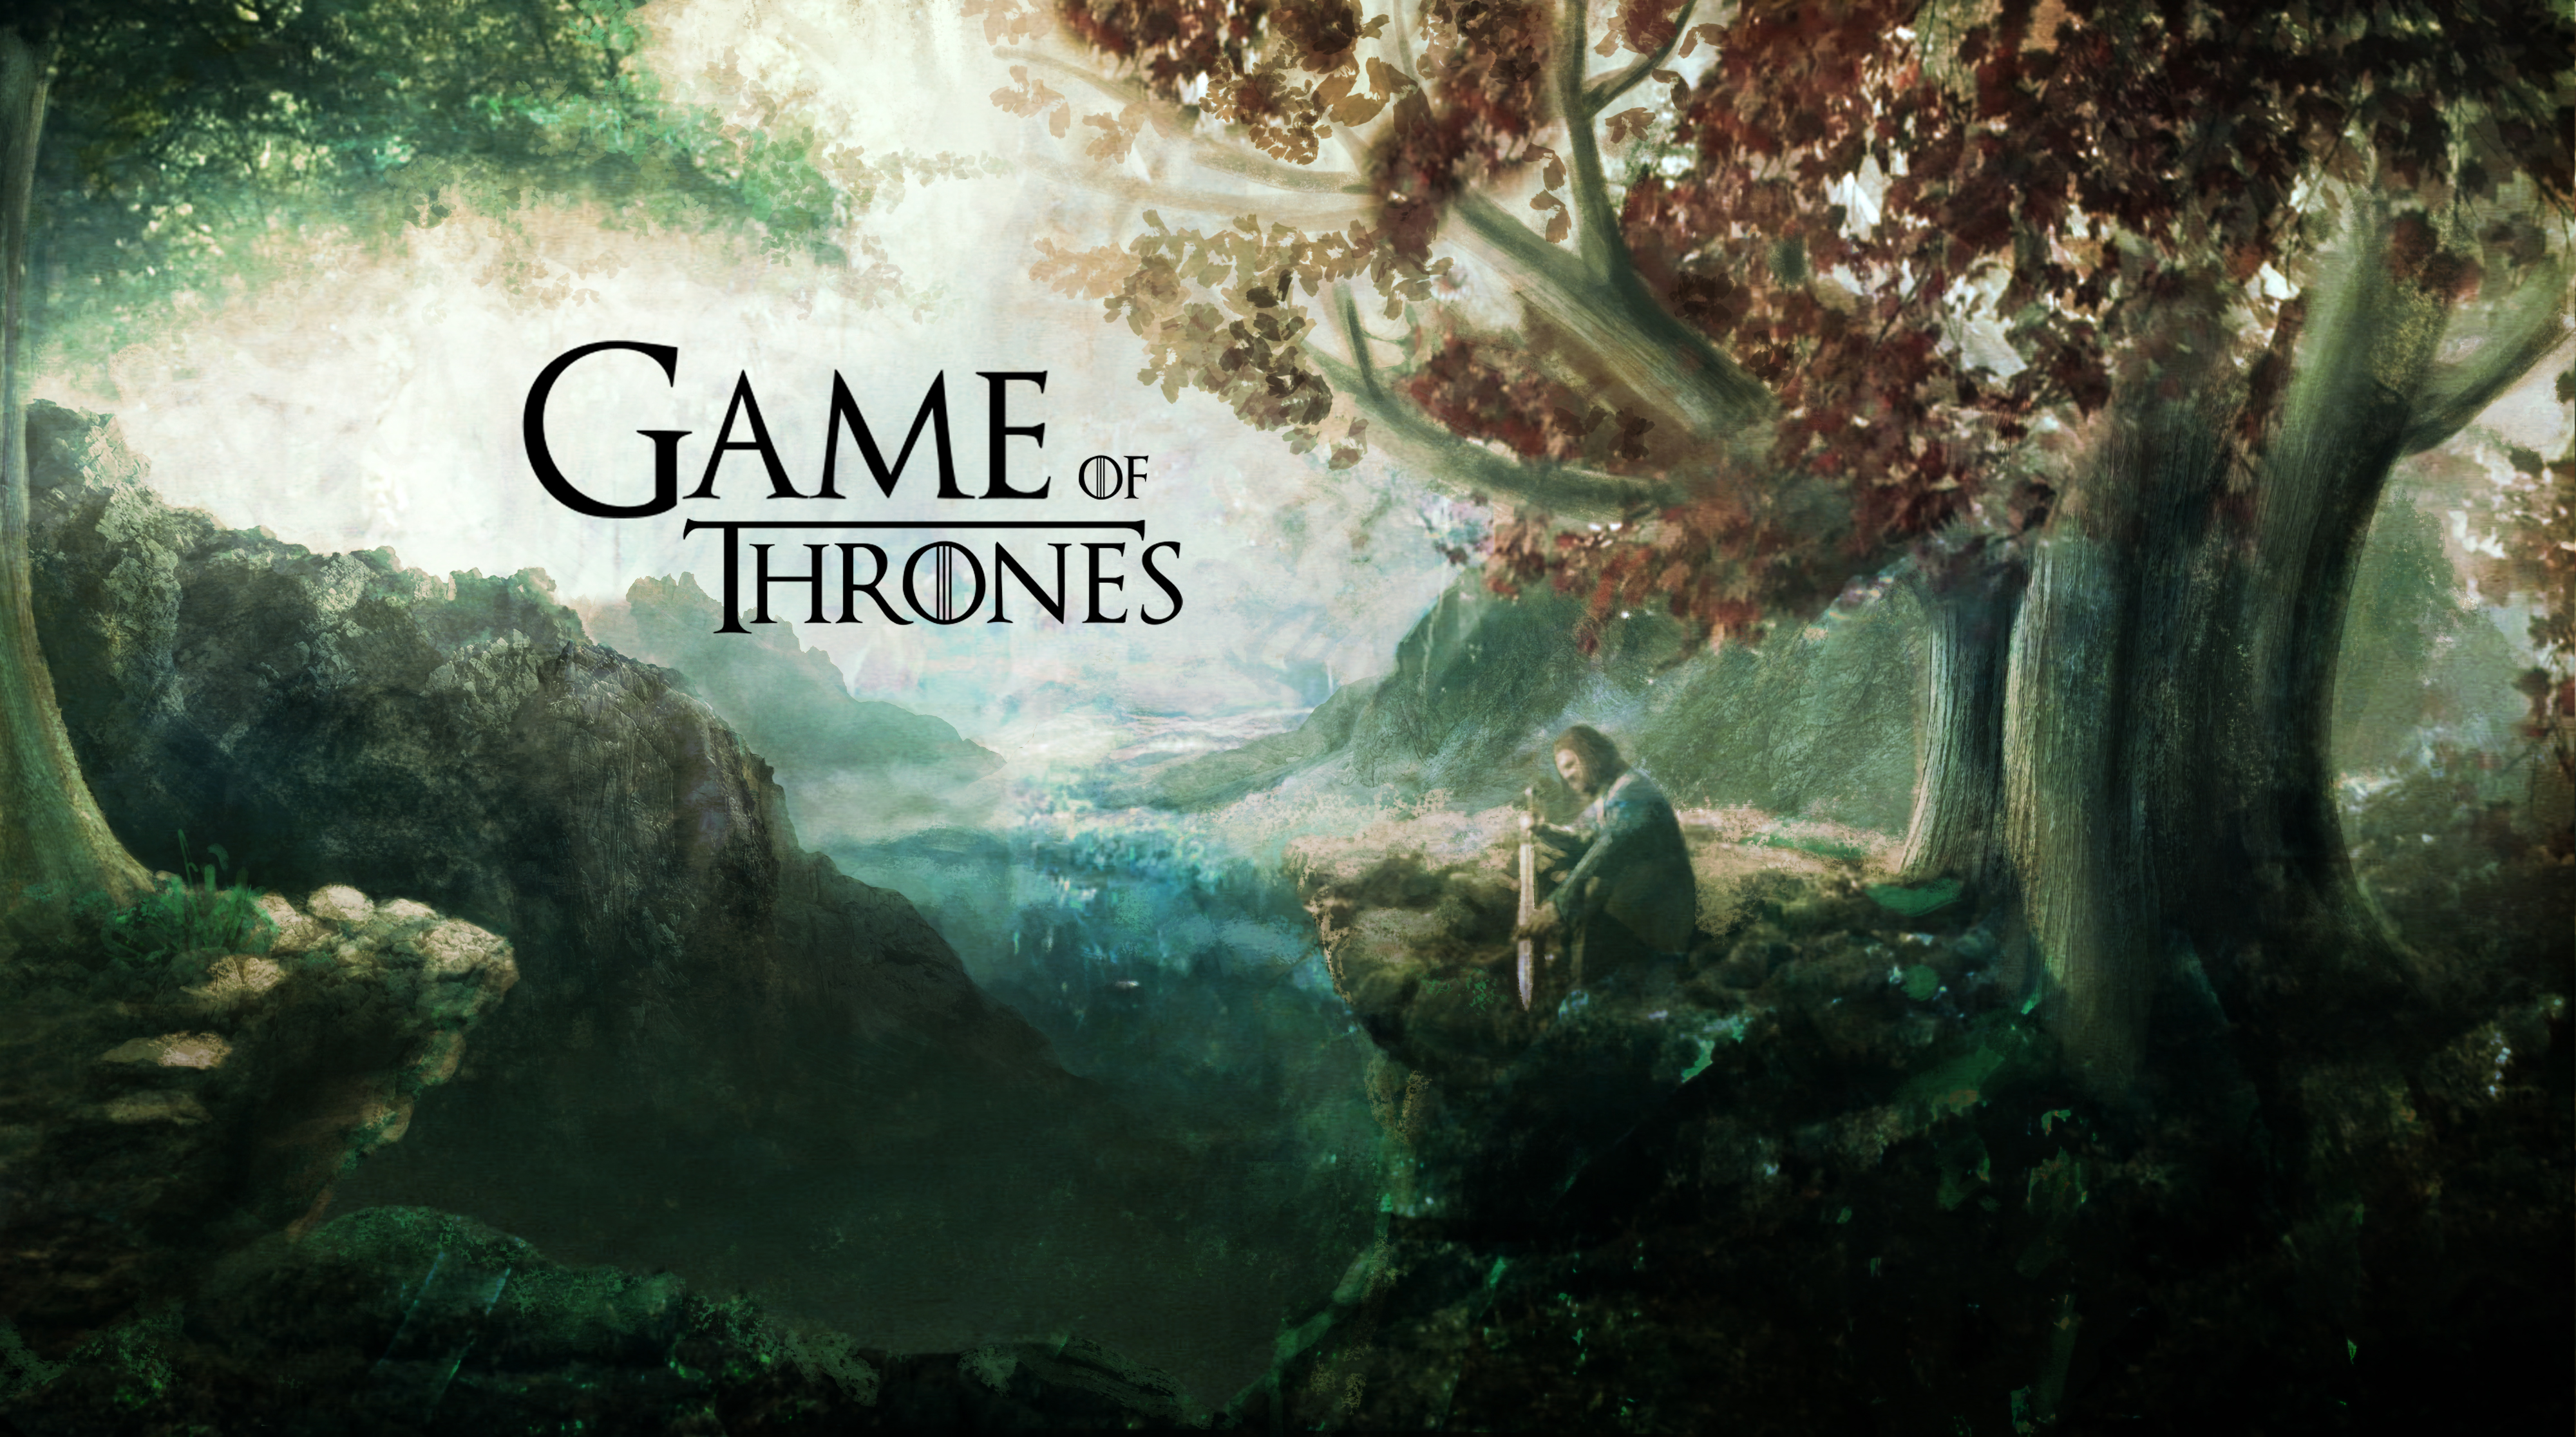 HD for desktop 1080p Game Of Thrones 